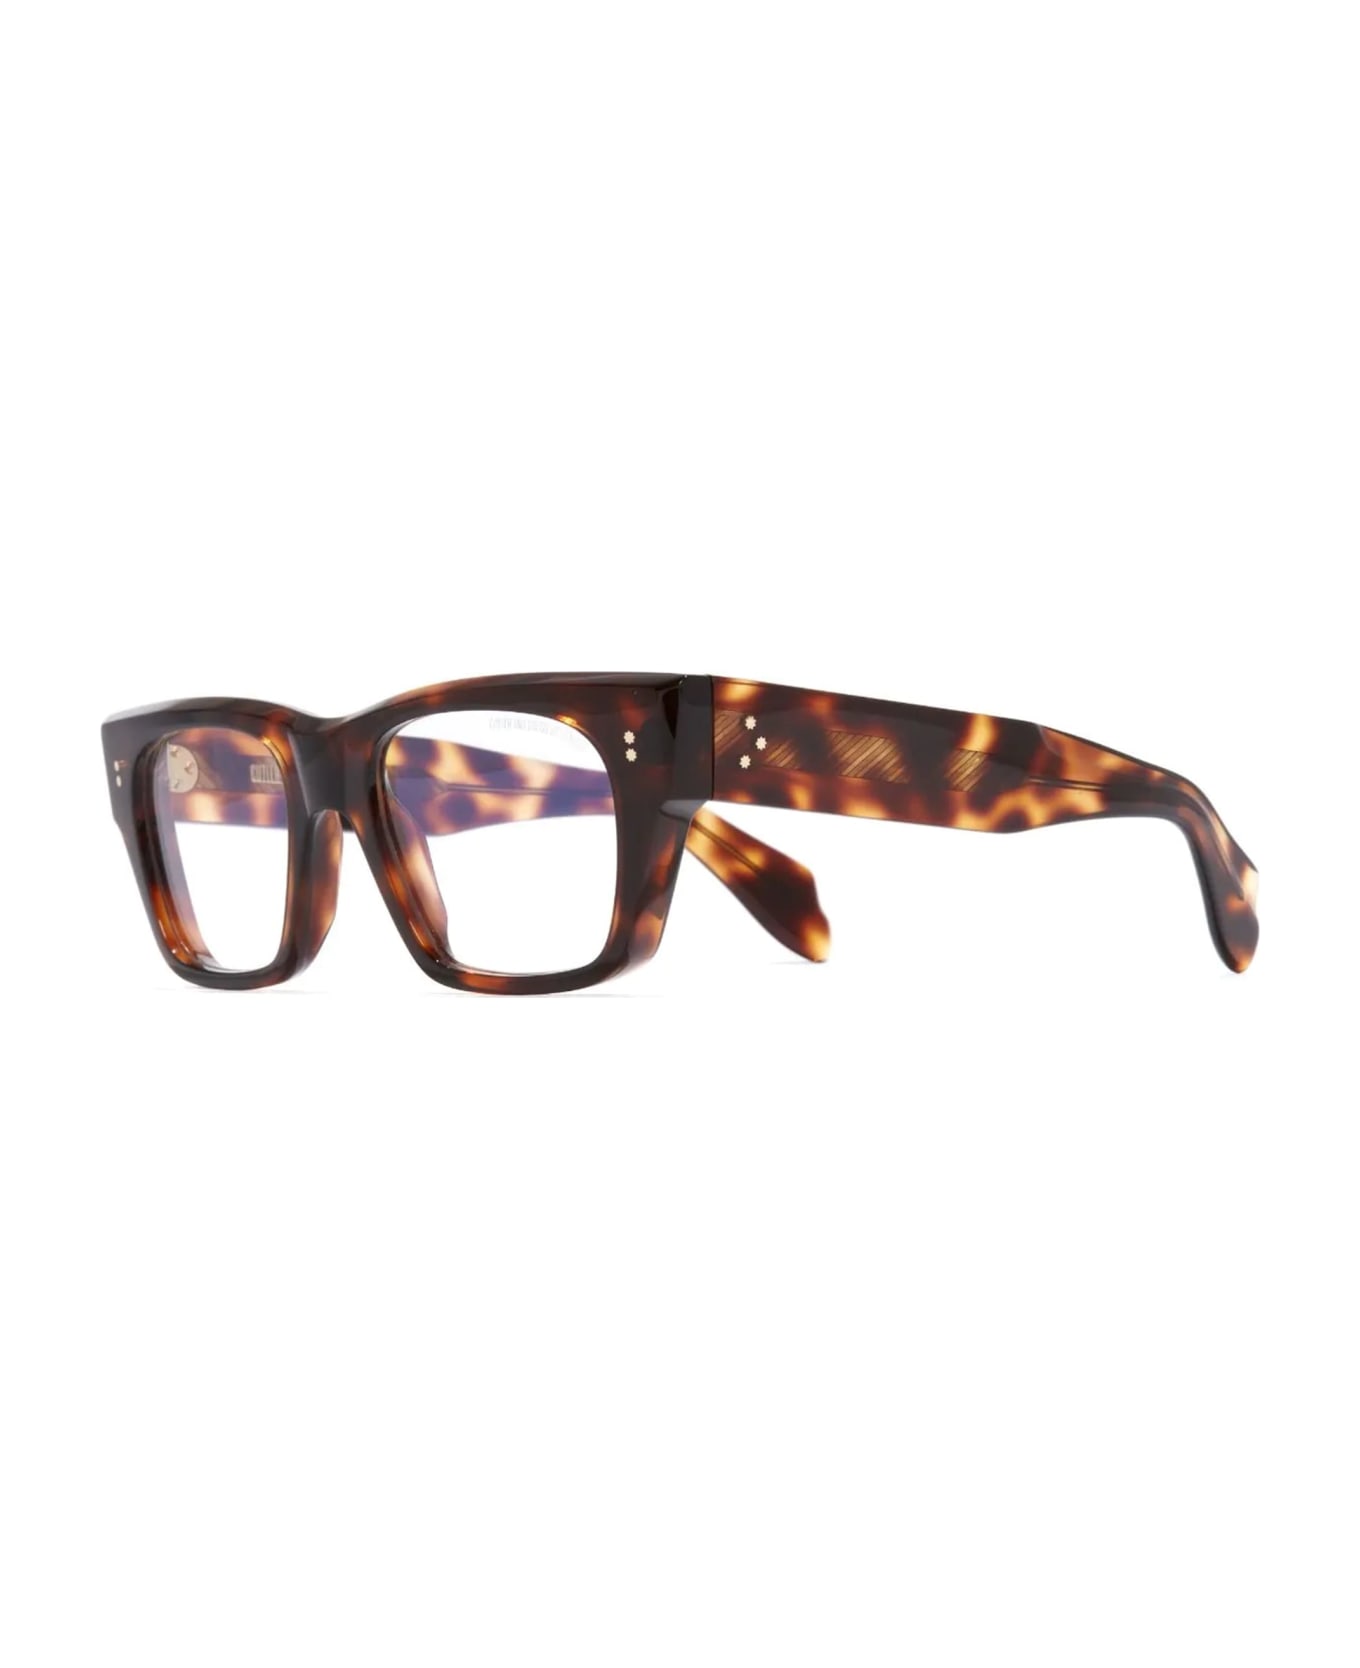 Cutler and Gross 9690 / Brown Havana Rx Glasses - Havana アイウェア